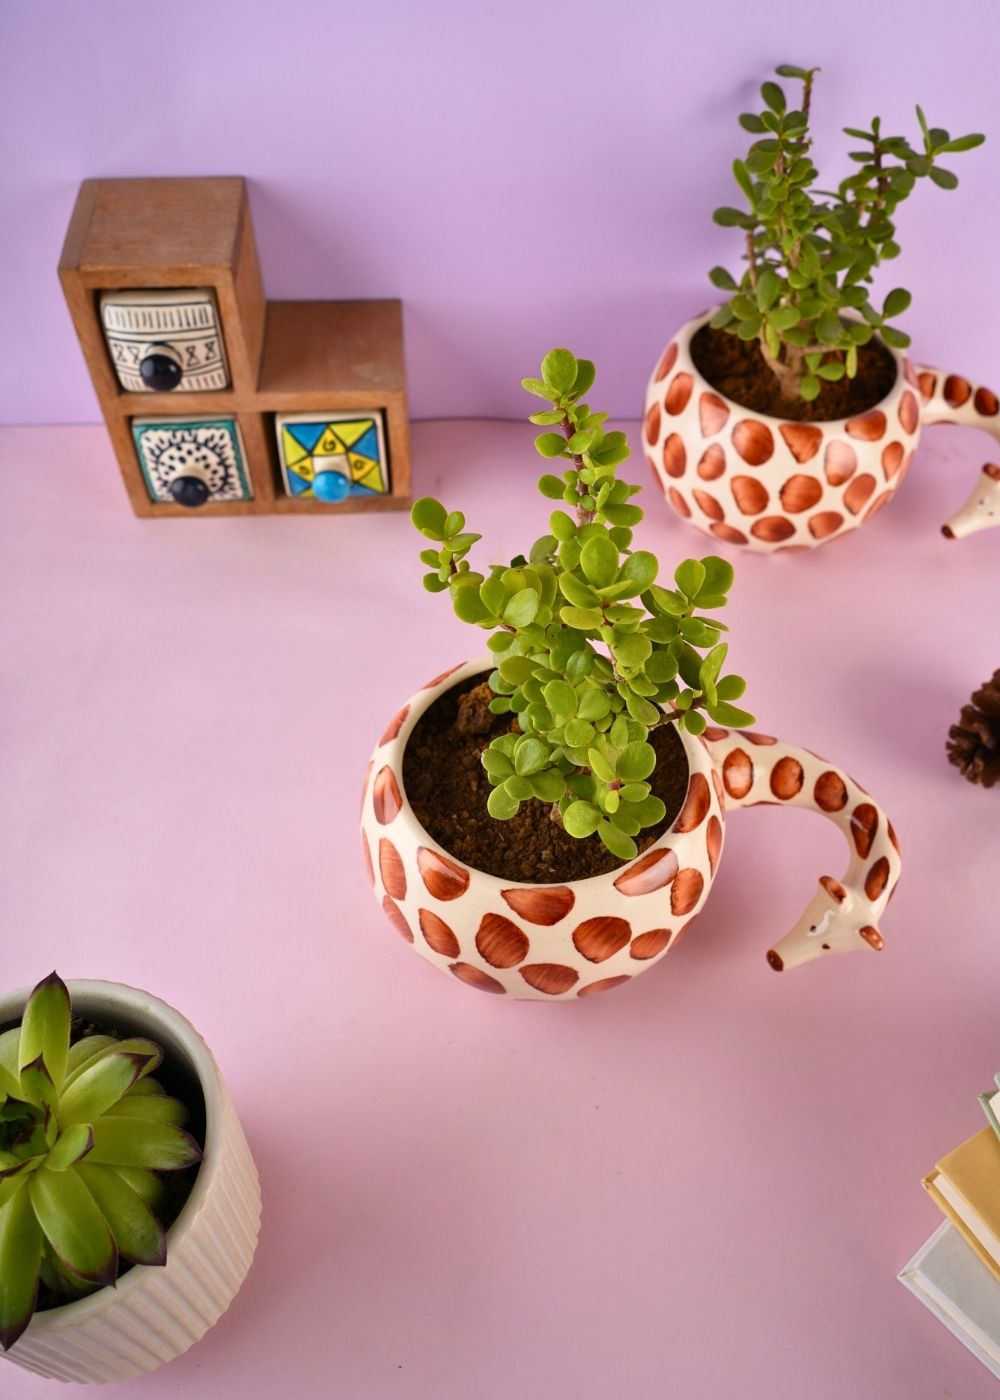 hello giraffe planter handmade in india